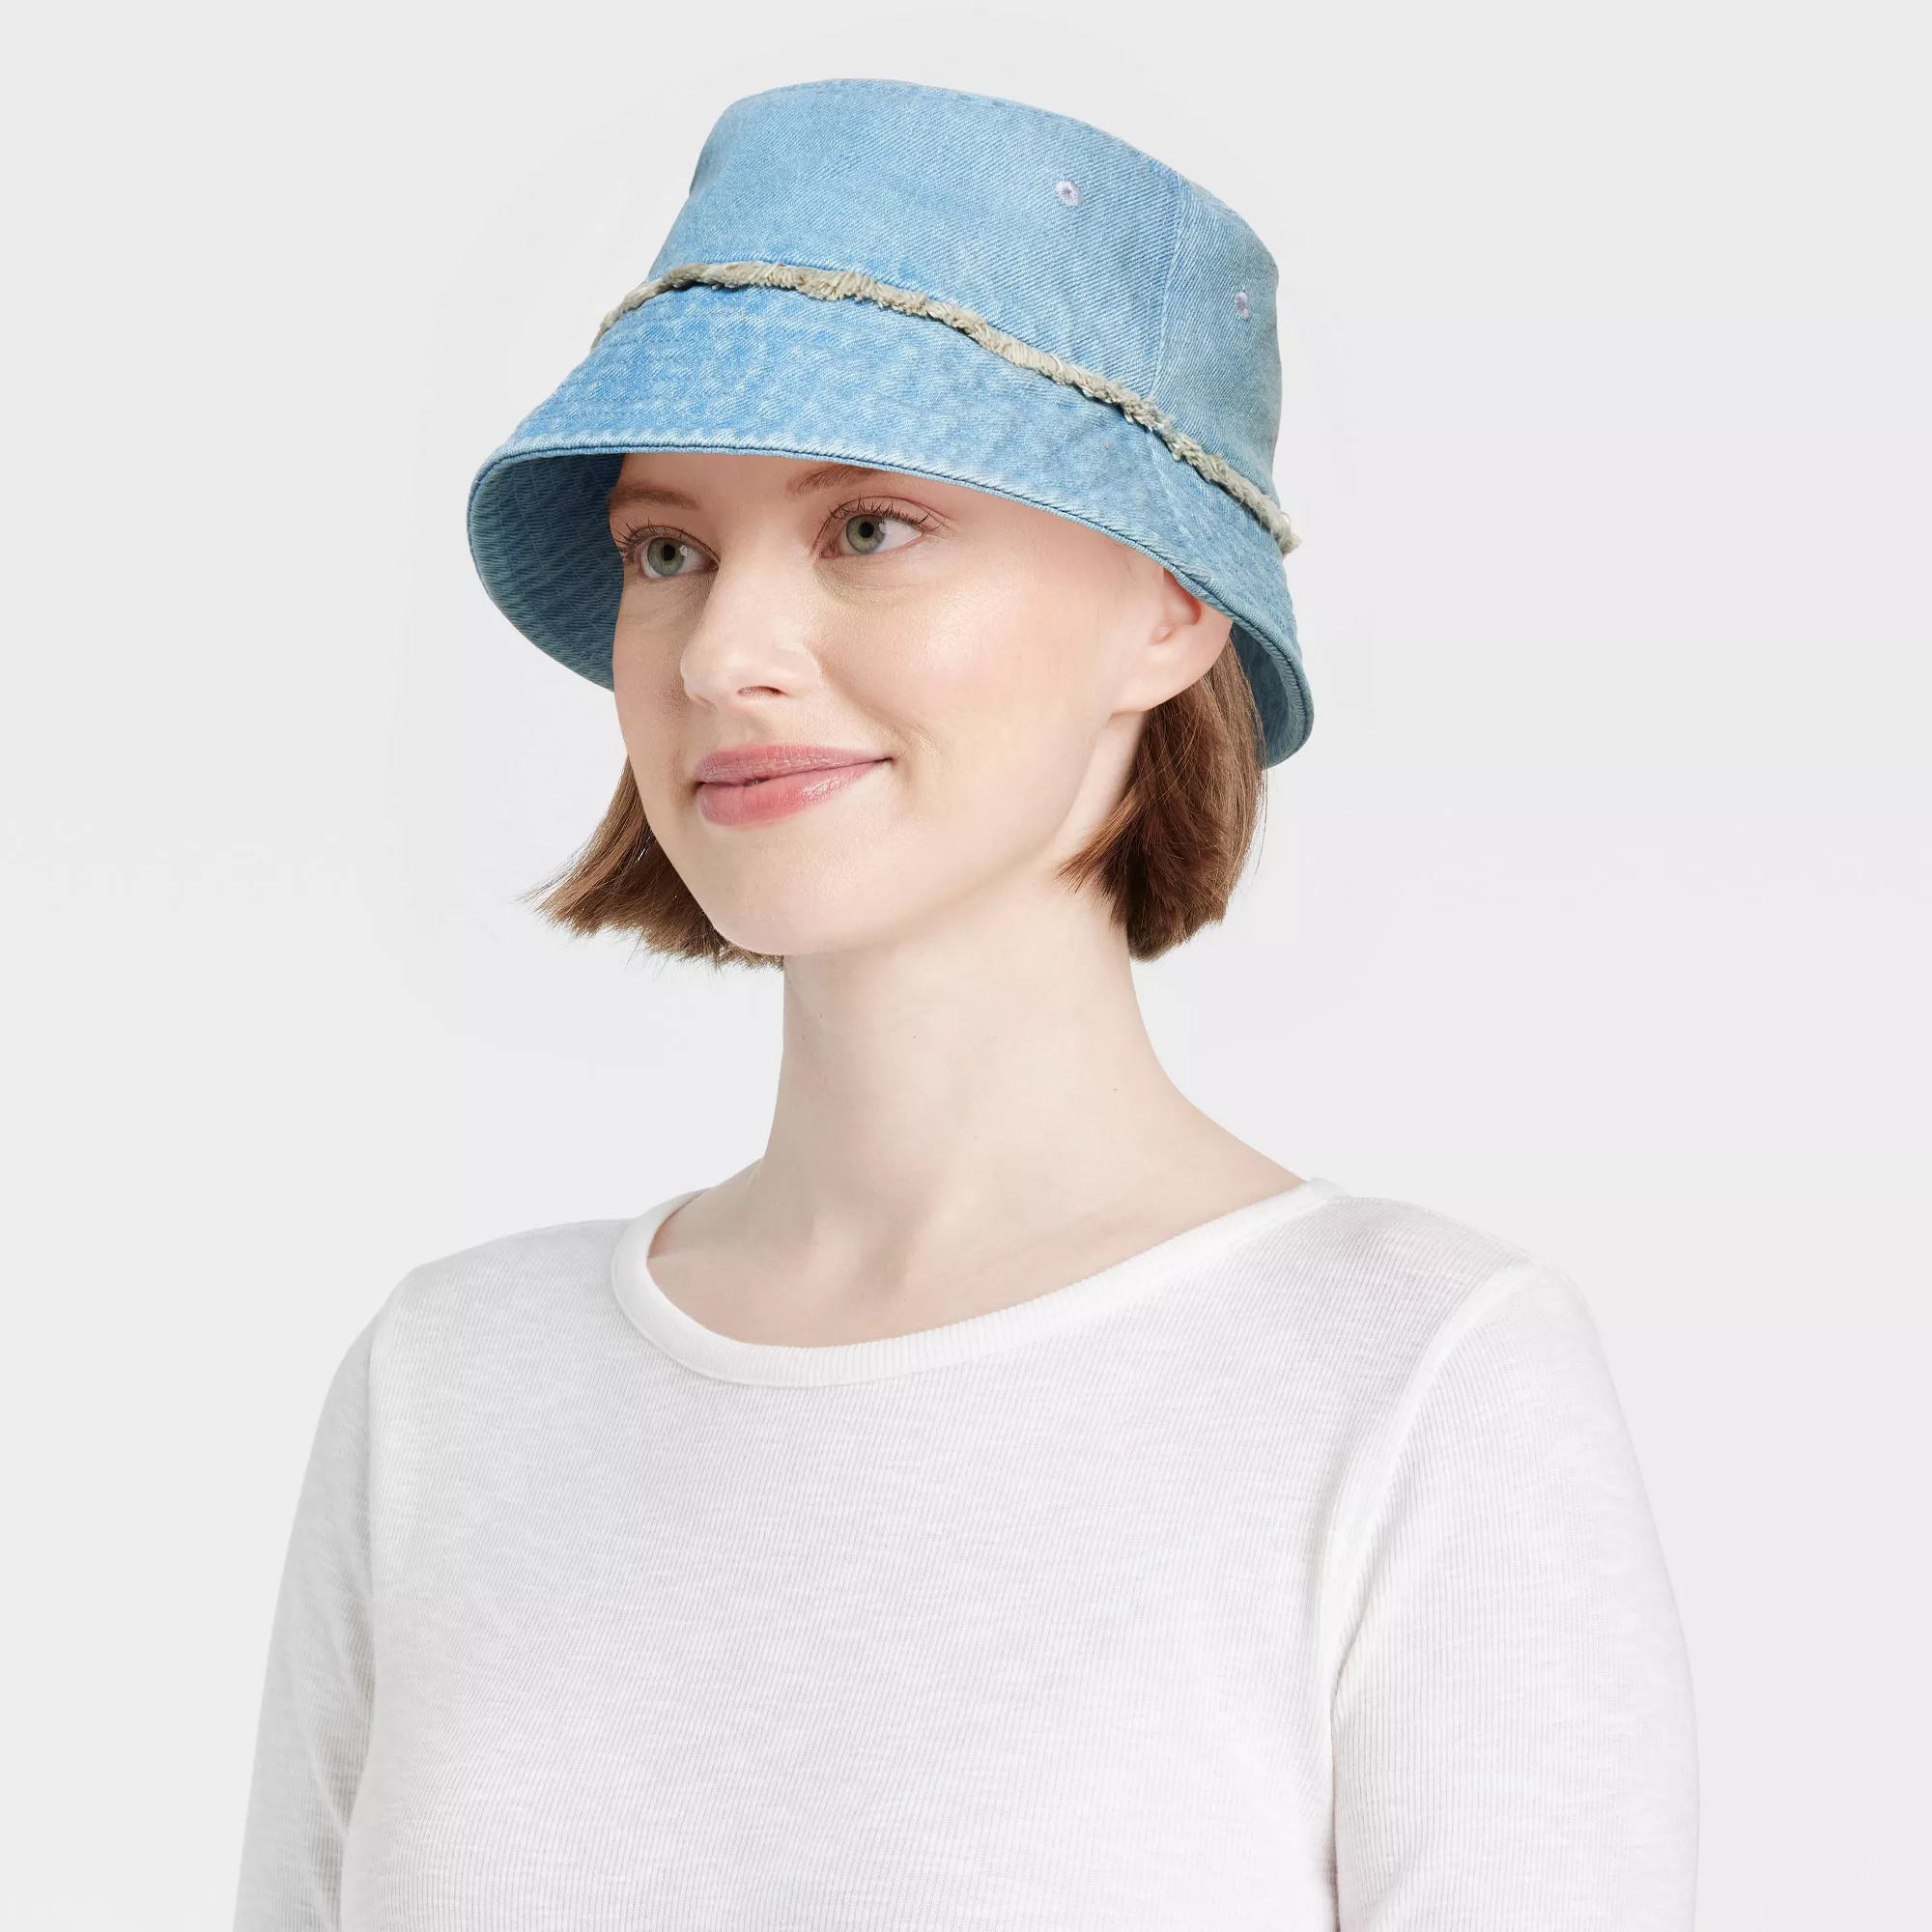 Model wearing a denim bucket hat with fringe detail